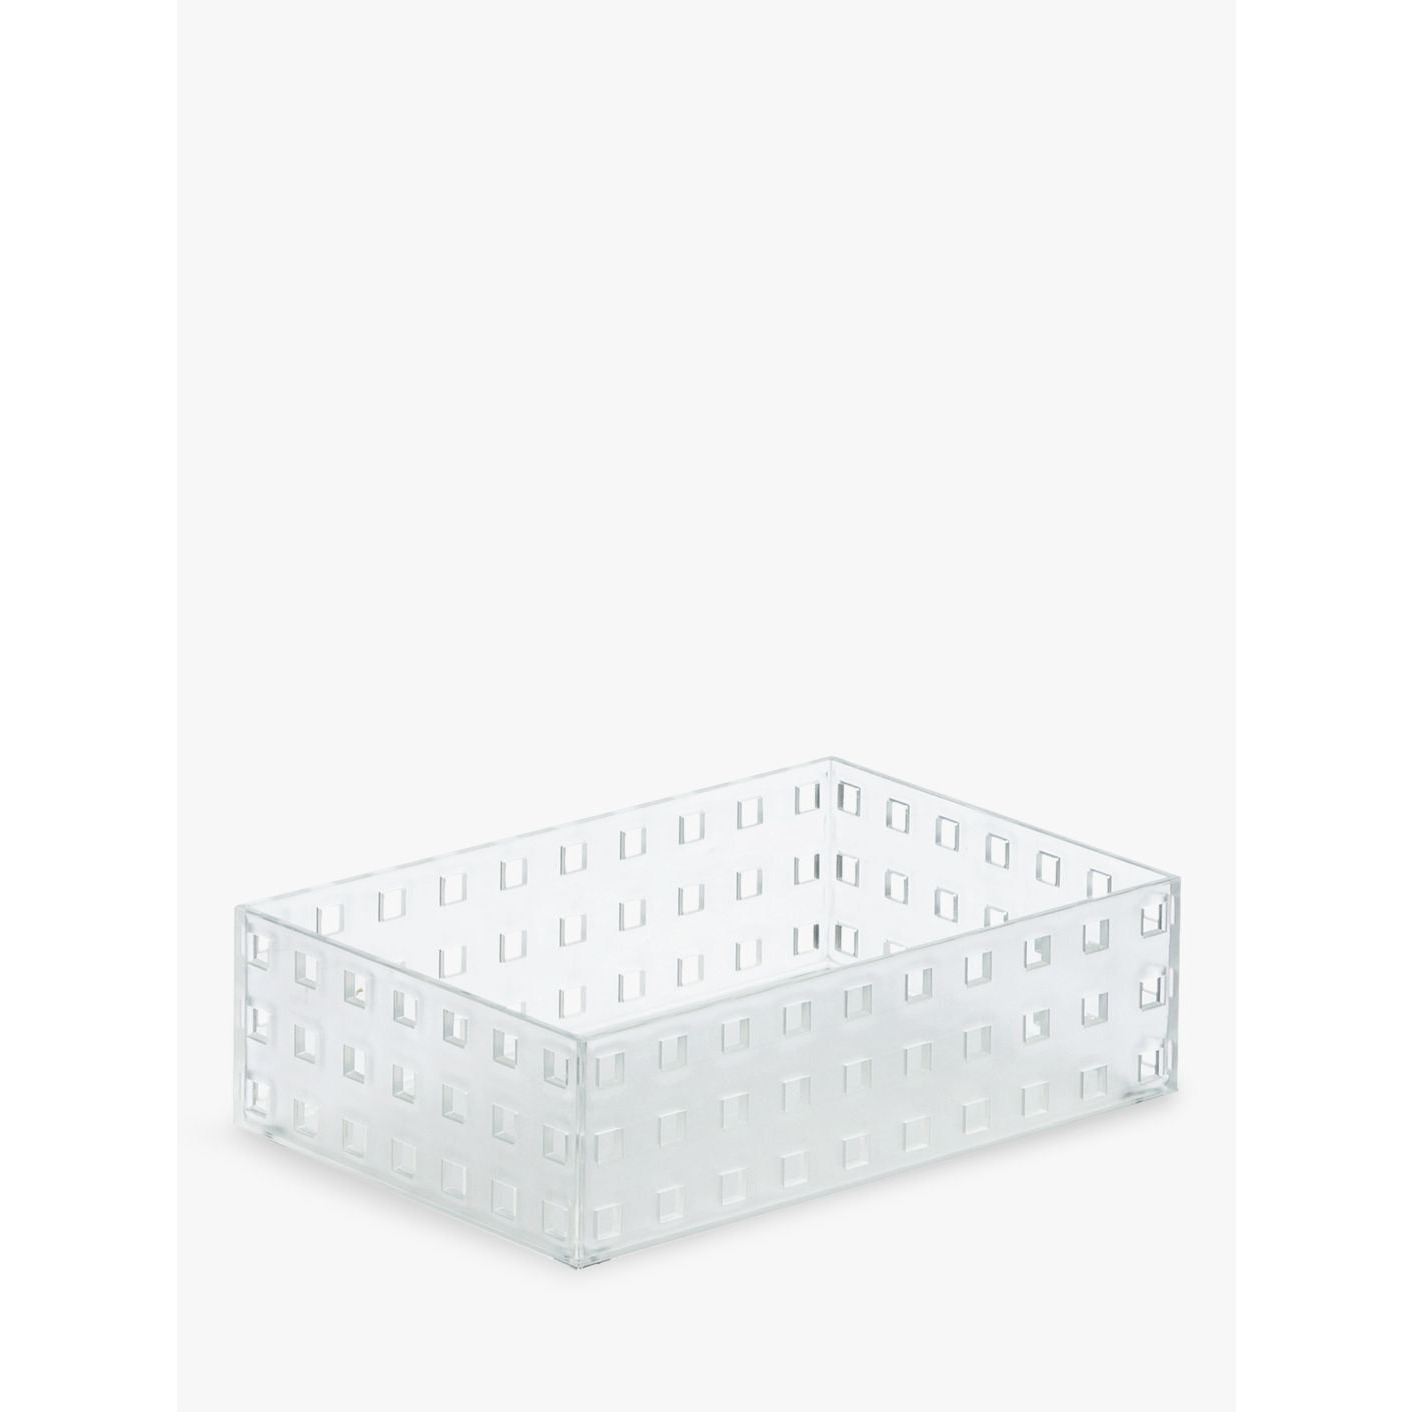 Like-it Bricks Plastic Storage Boxes, Set of 2 - image 1